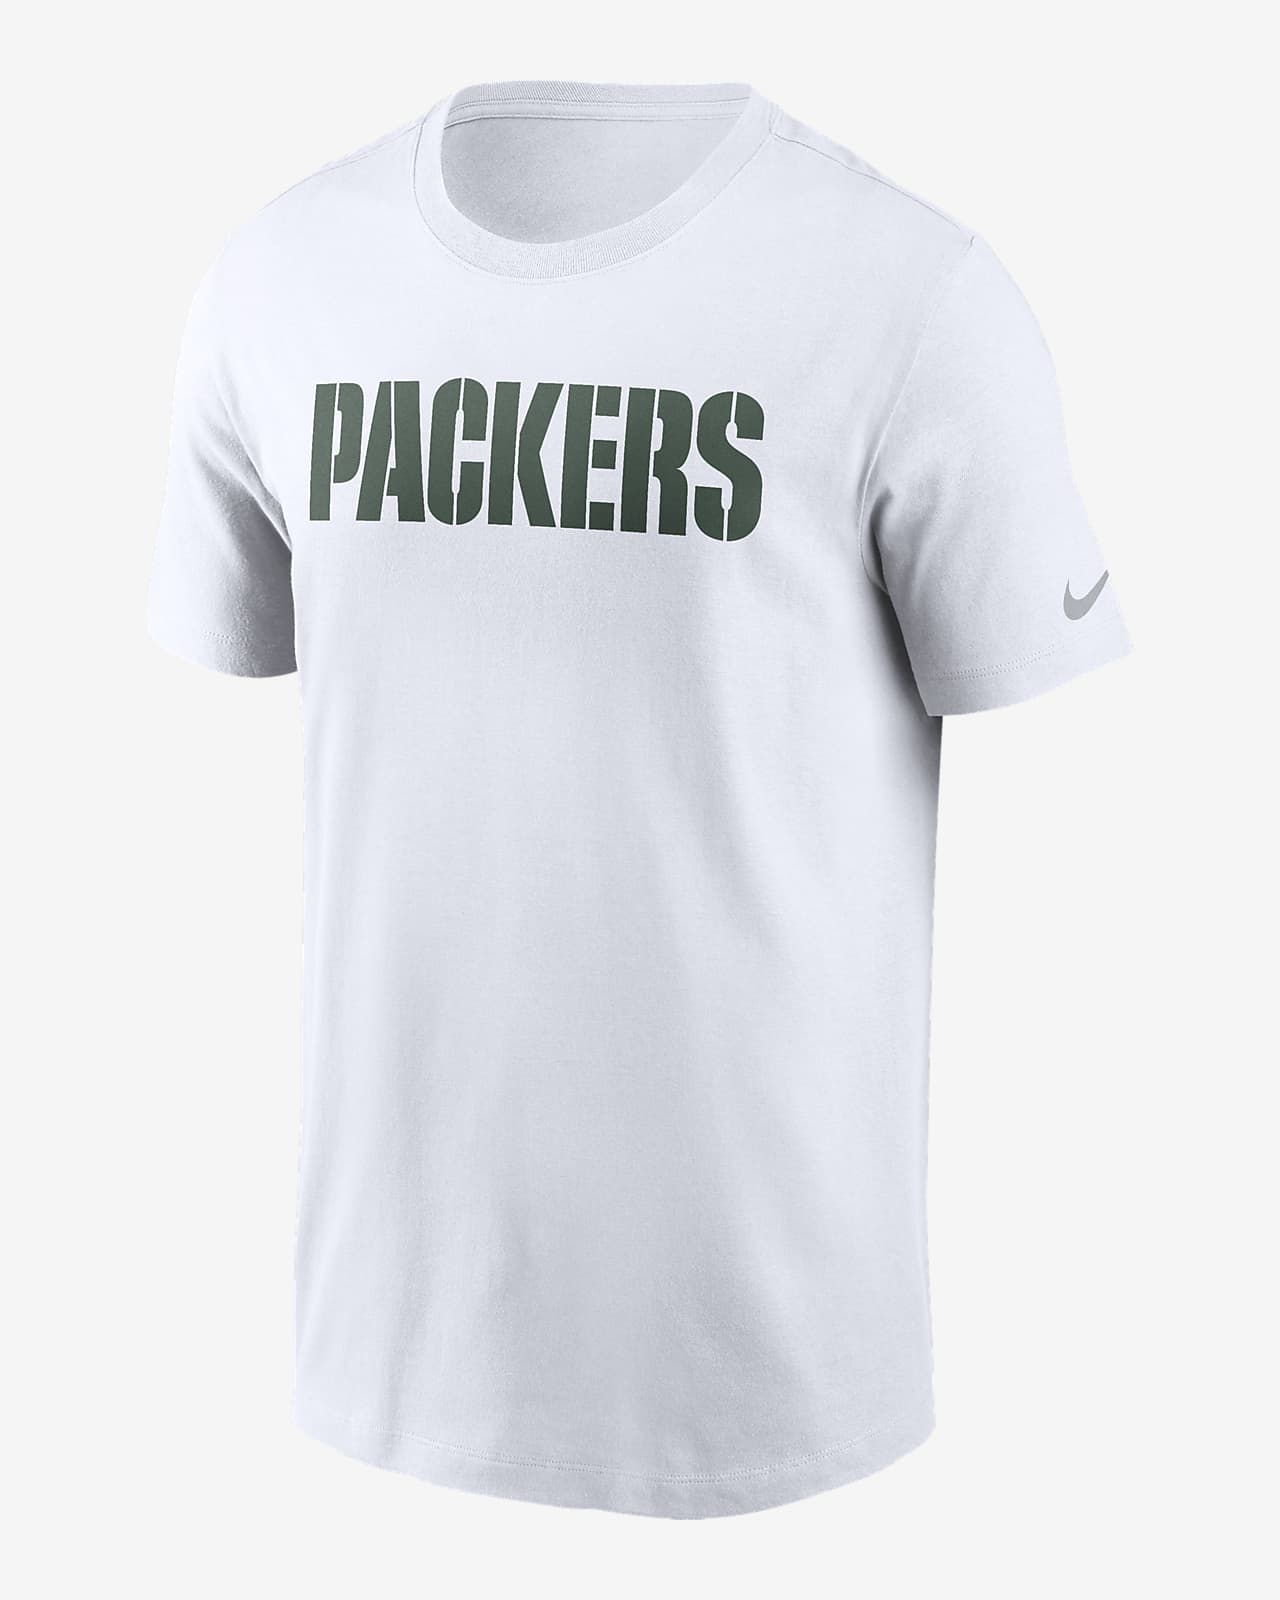 Playera Nike de la NFL para hombre Green Bay Packers Primetime Wordmark Essential